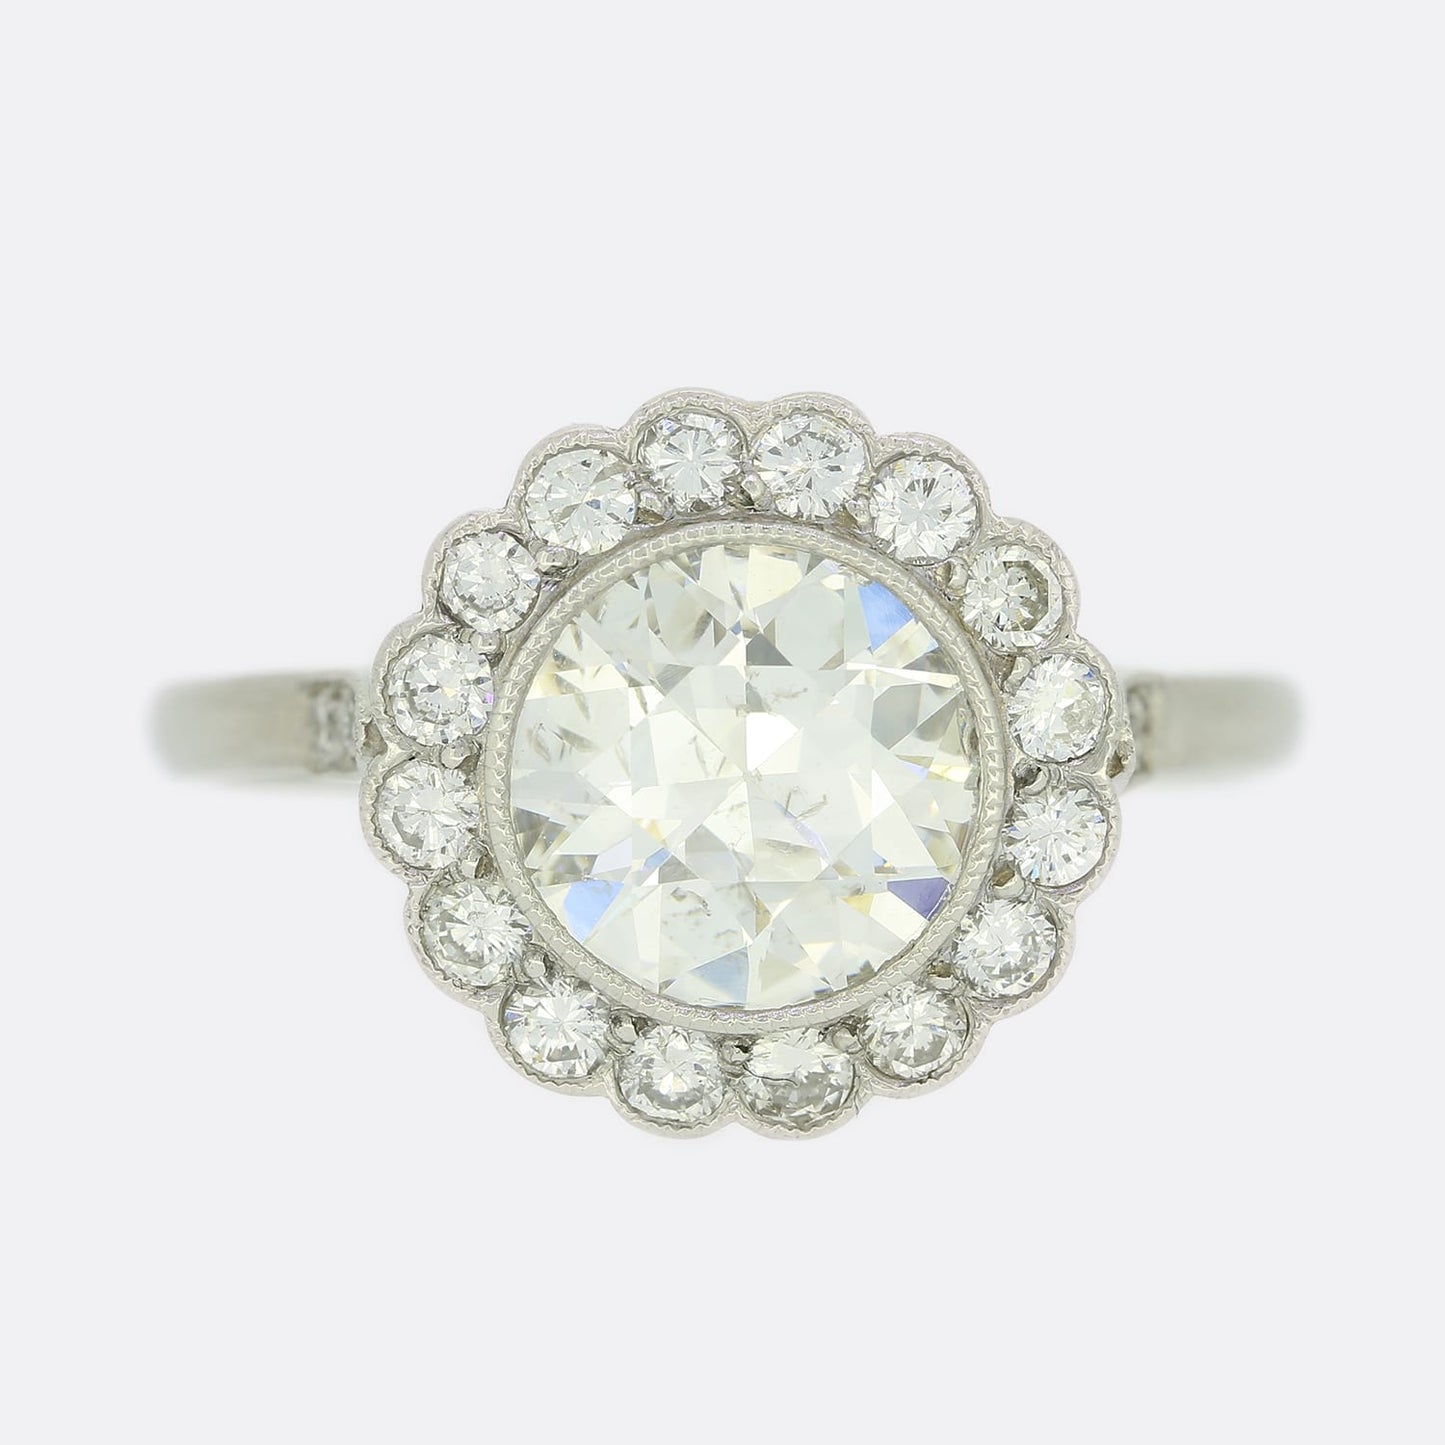 Art Deco Style 1.35 Carat Old Cut Diamond Cluster Ring